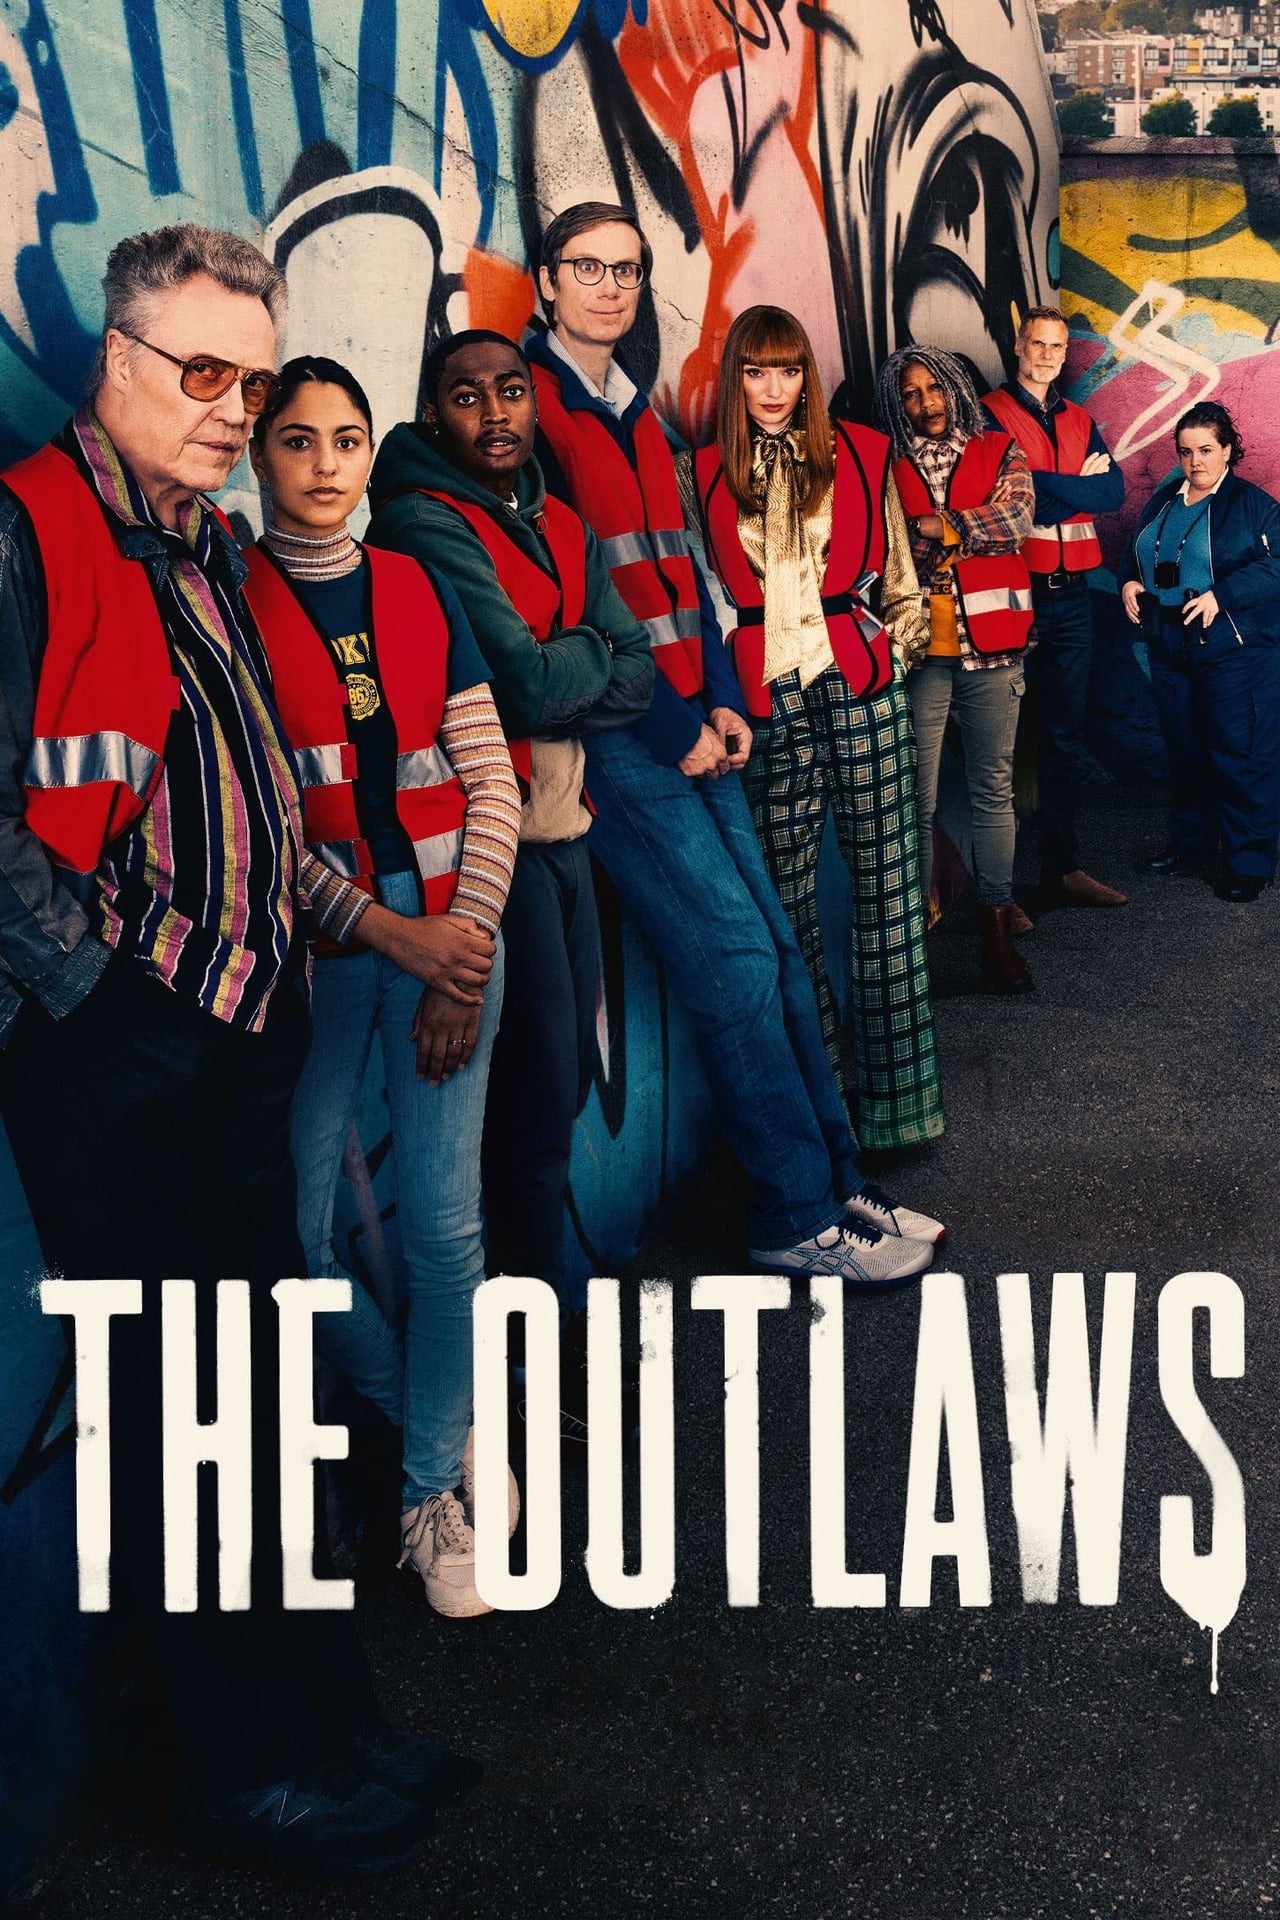 The Outlaws (season 1)